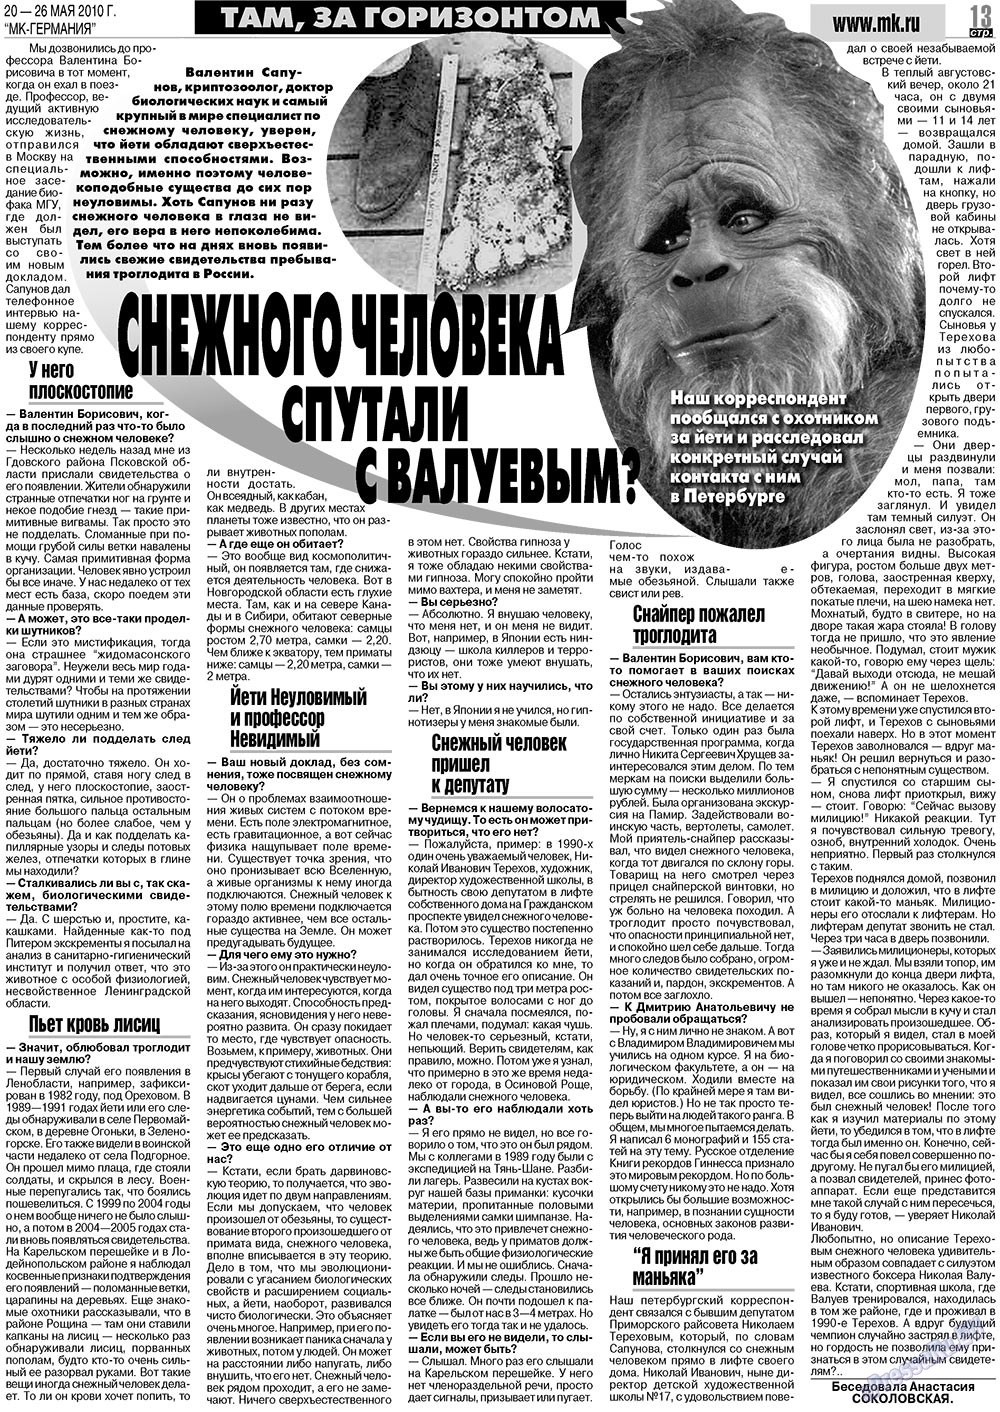 МК-Германия, газета. 2010 №21 стр.13